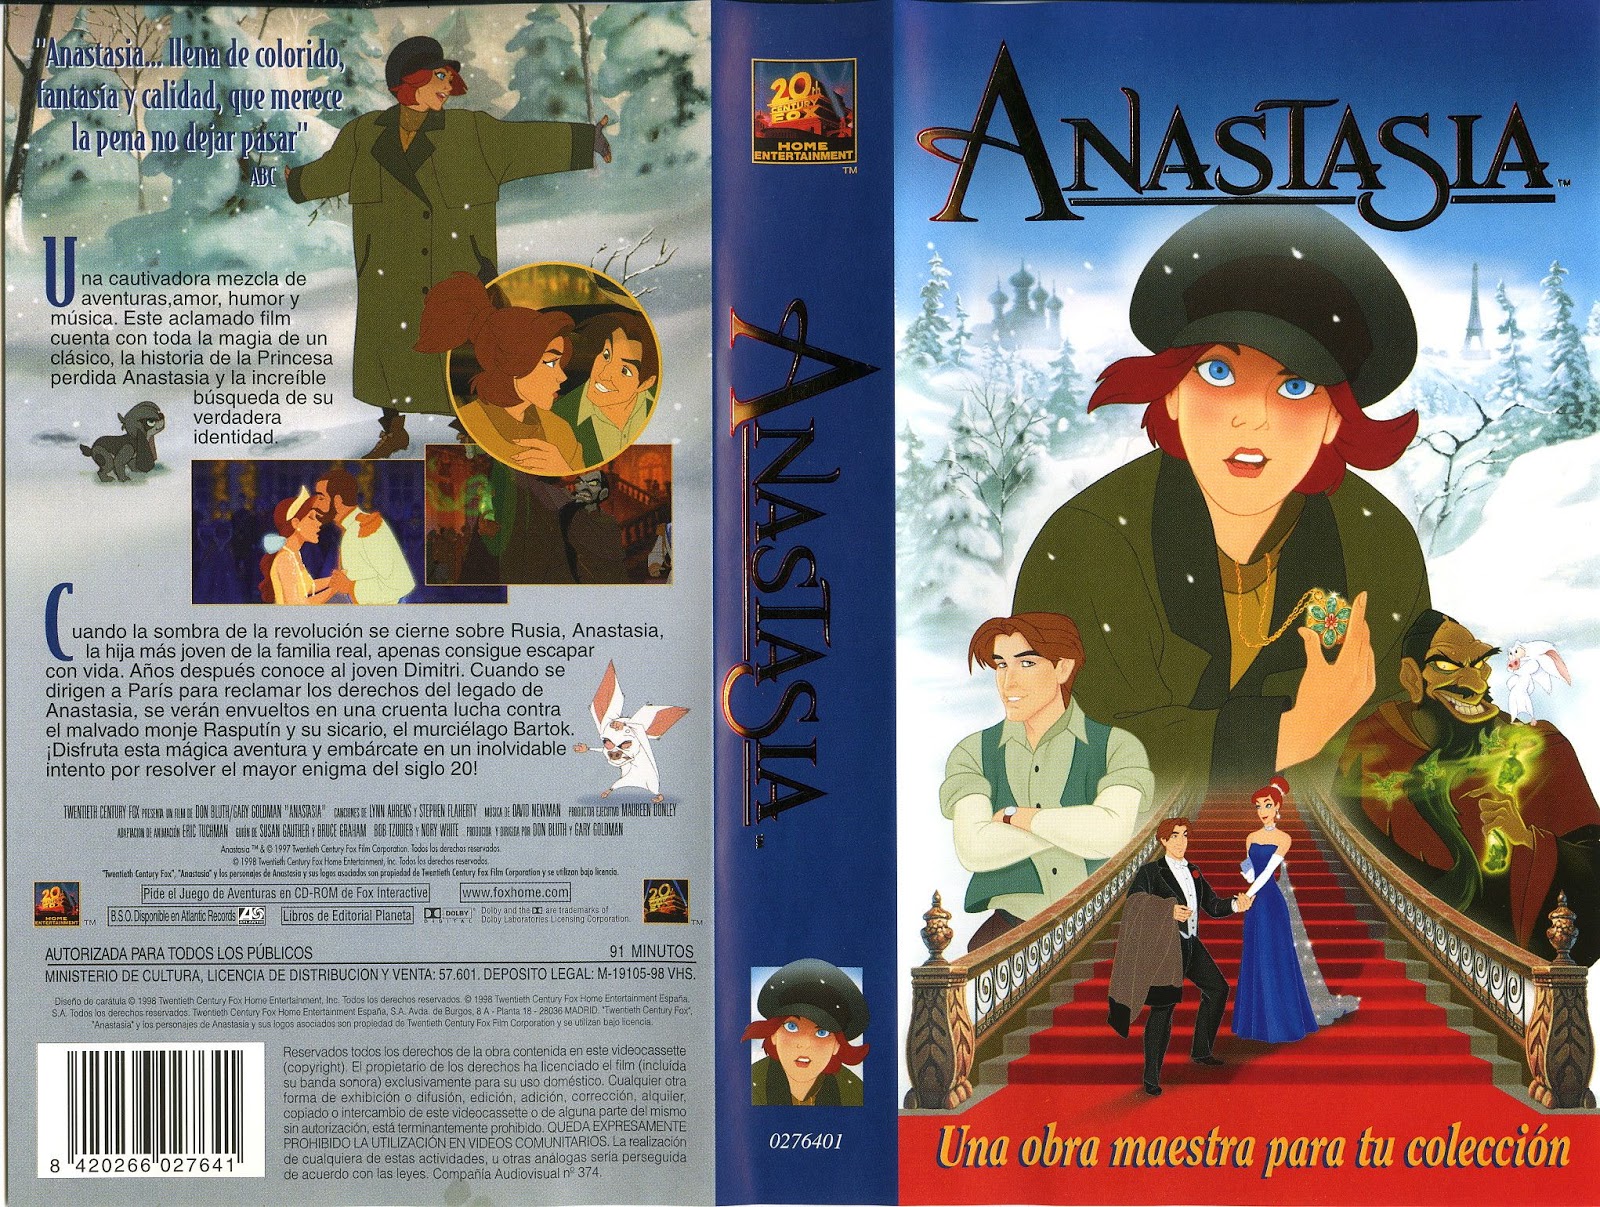 Opening to anastasia 1998 vhs